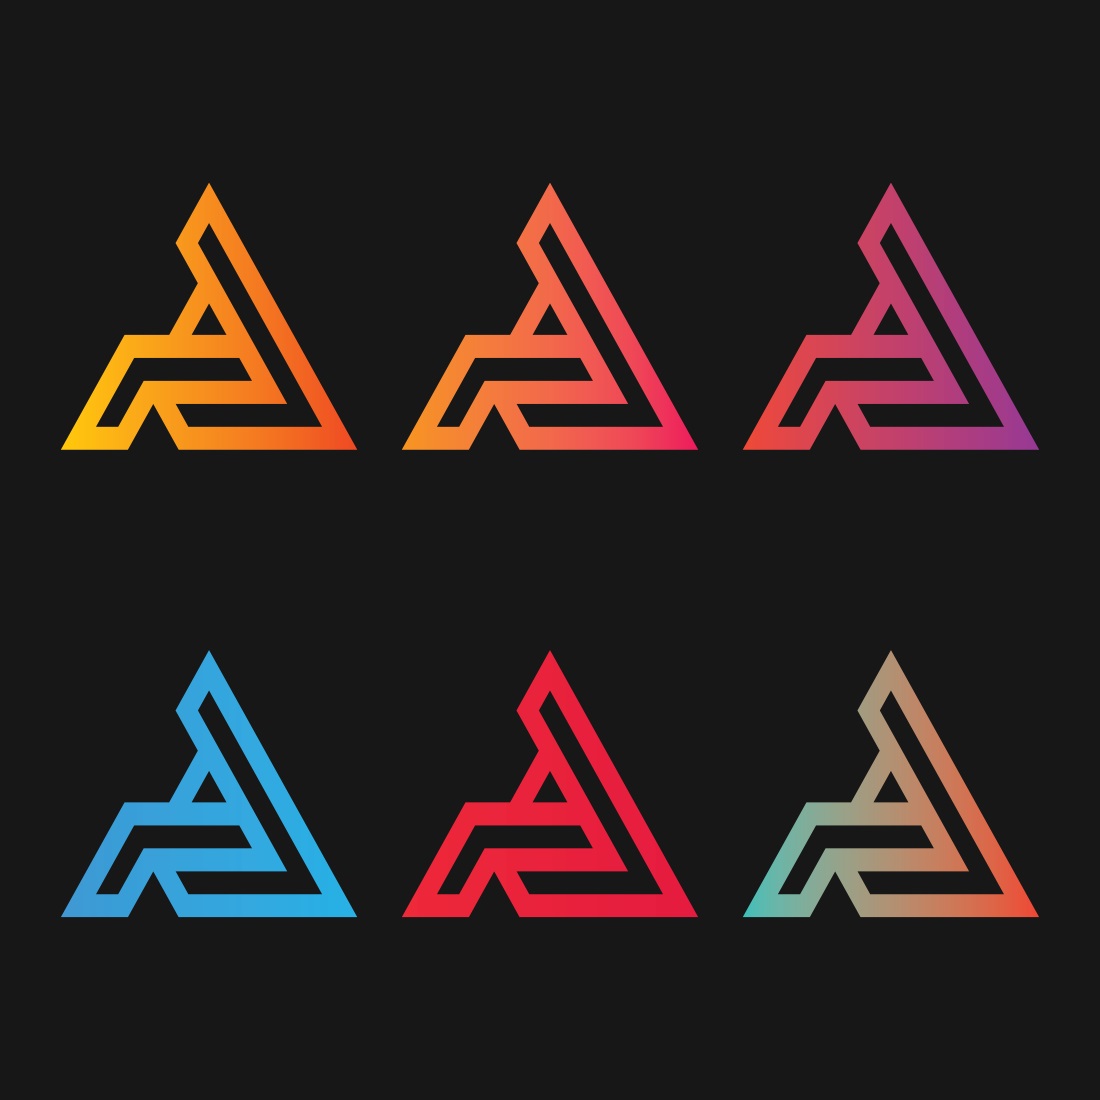 Letter A & Architecture Design Logo Template